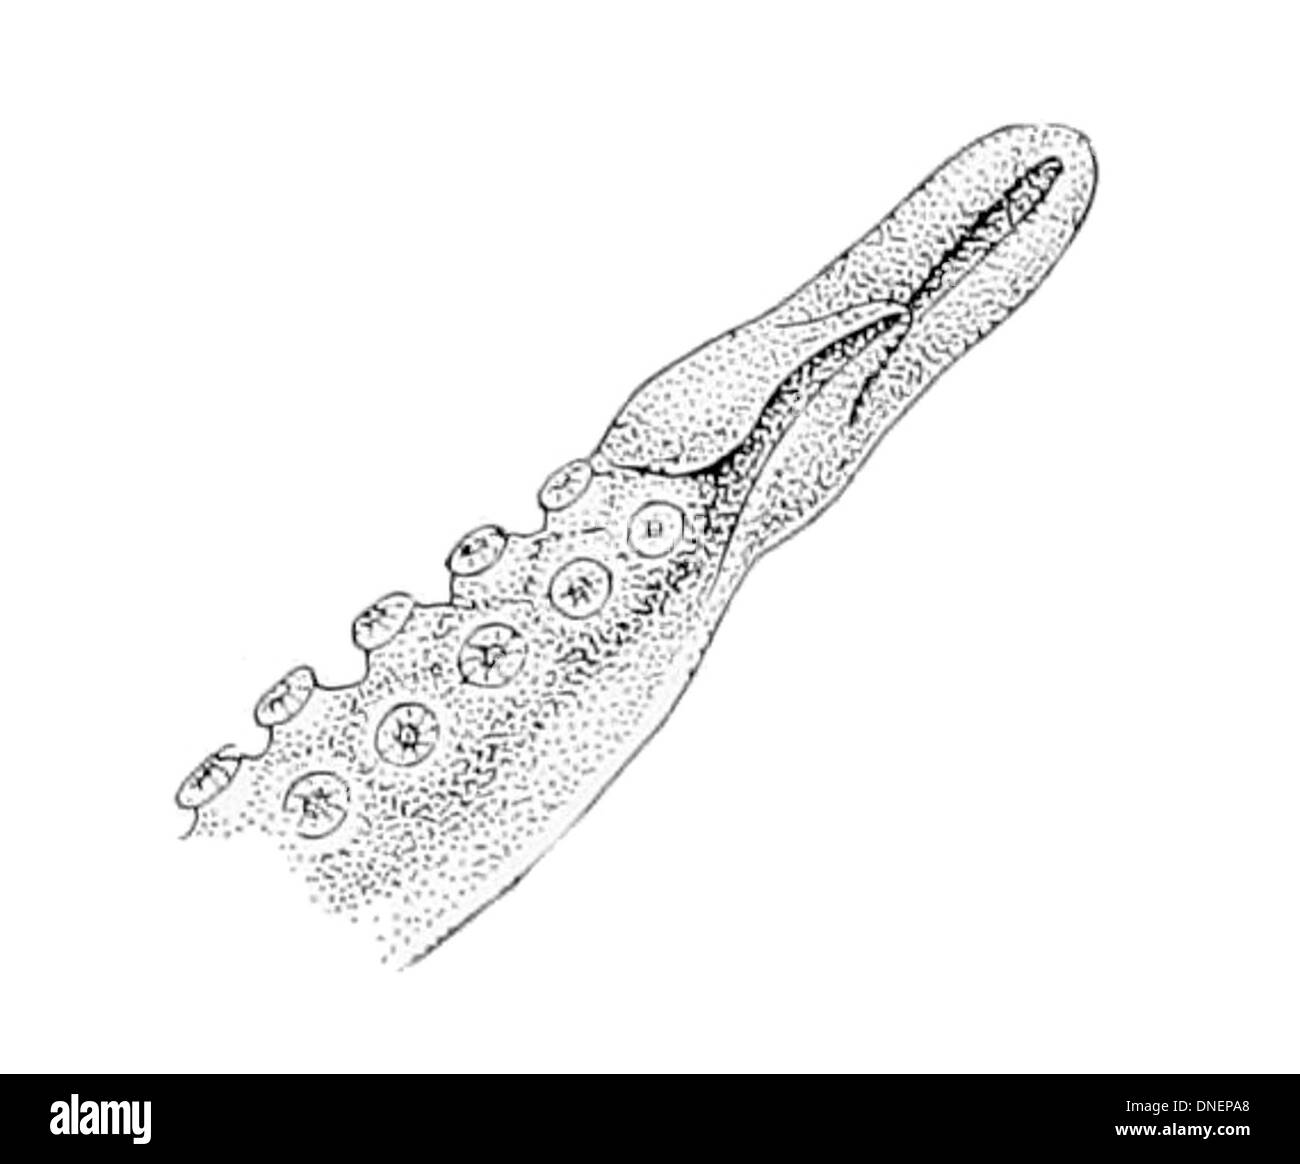 Scaeurgus Patagiatus hectocotylus Stockfoto